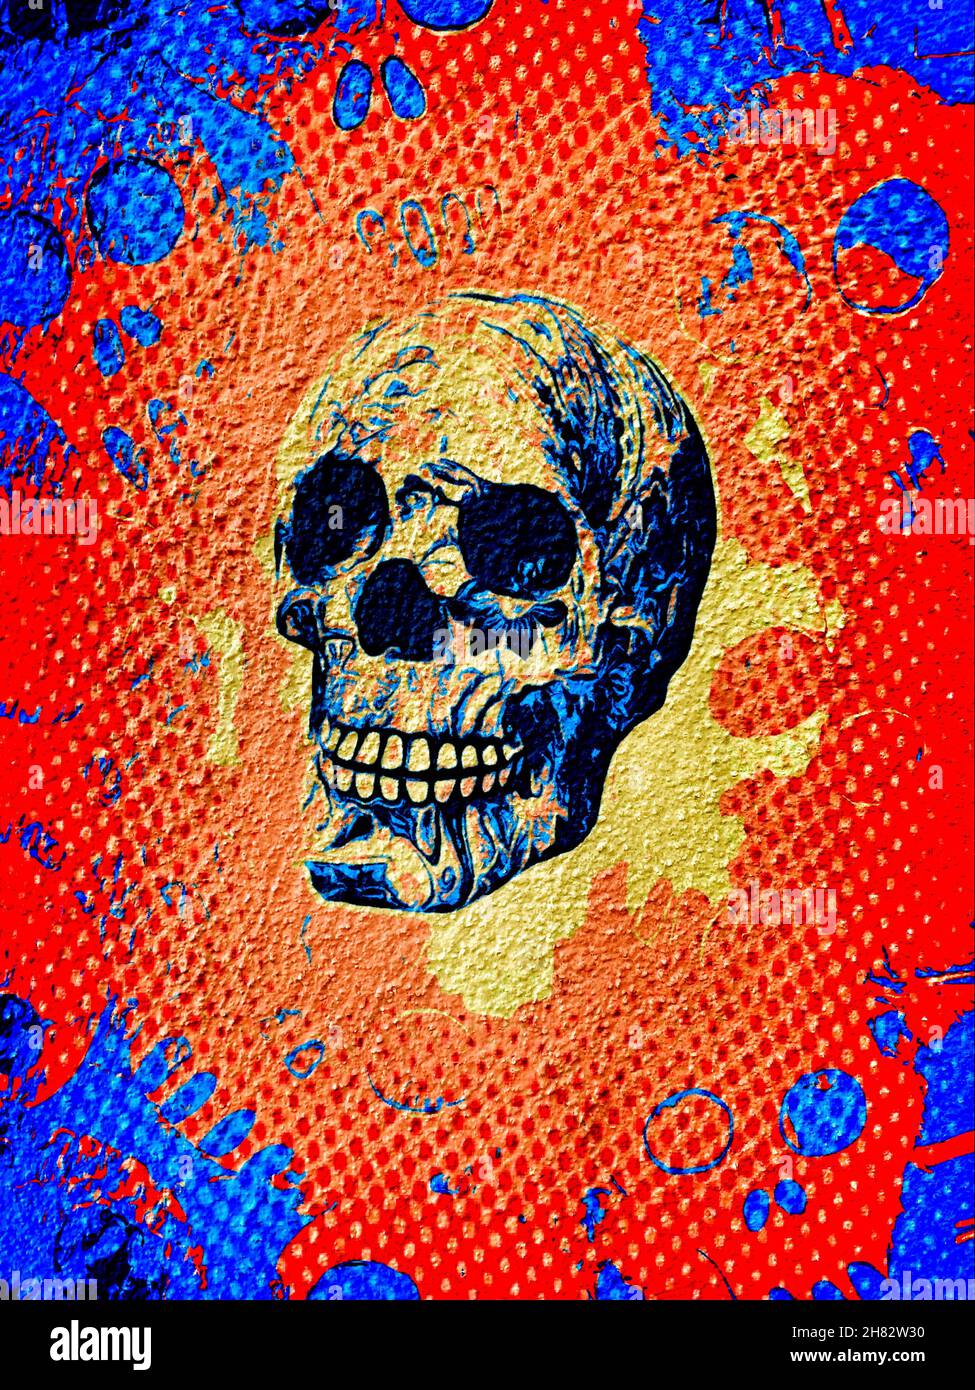 Pop art retro illustration. Human skull head skeleton over red and blue  background Stock Photo - Alamy